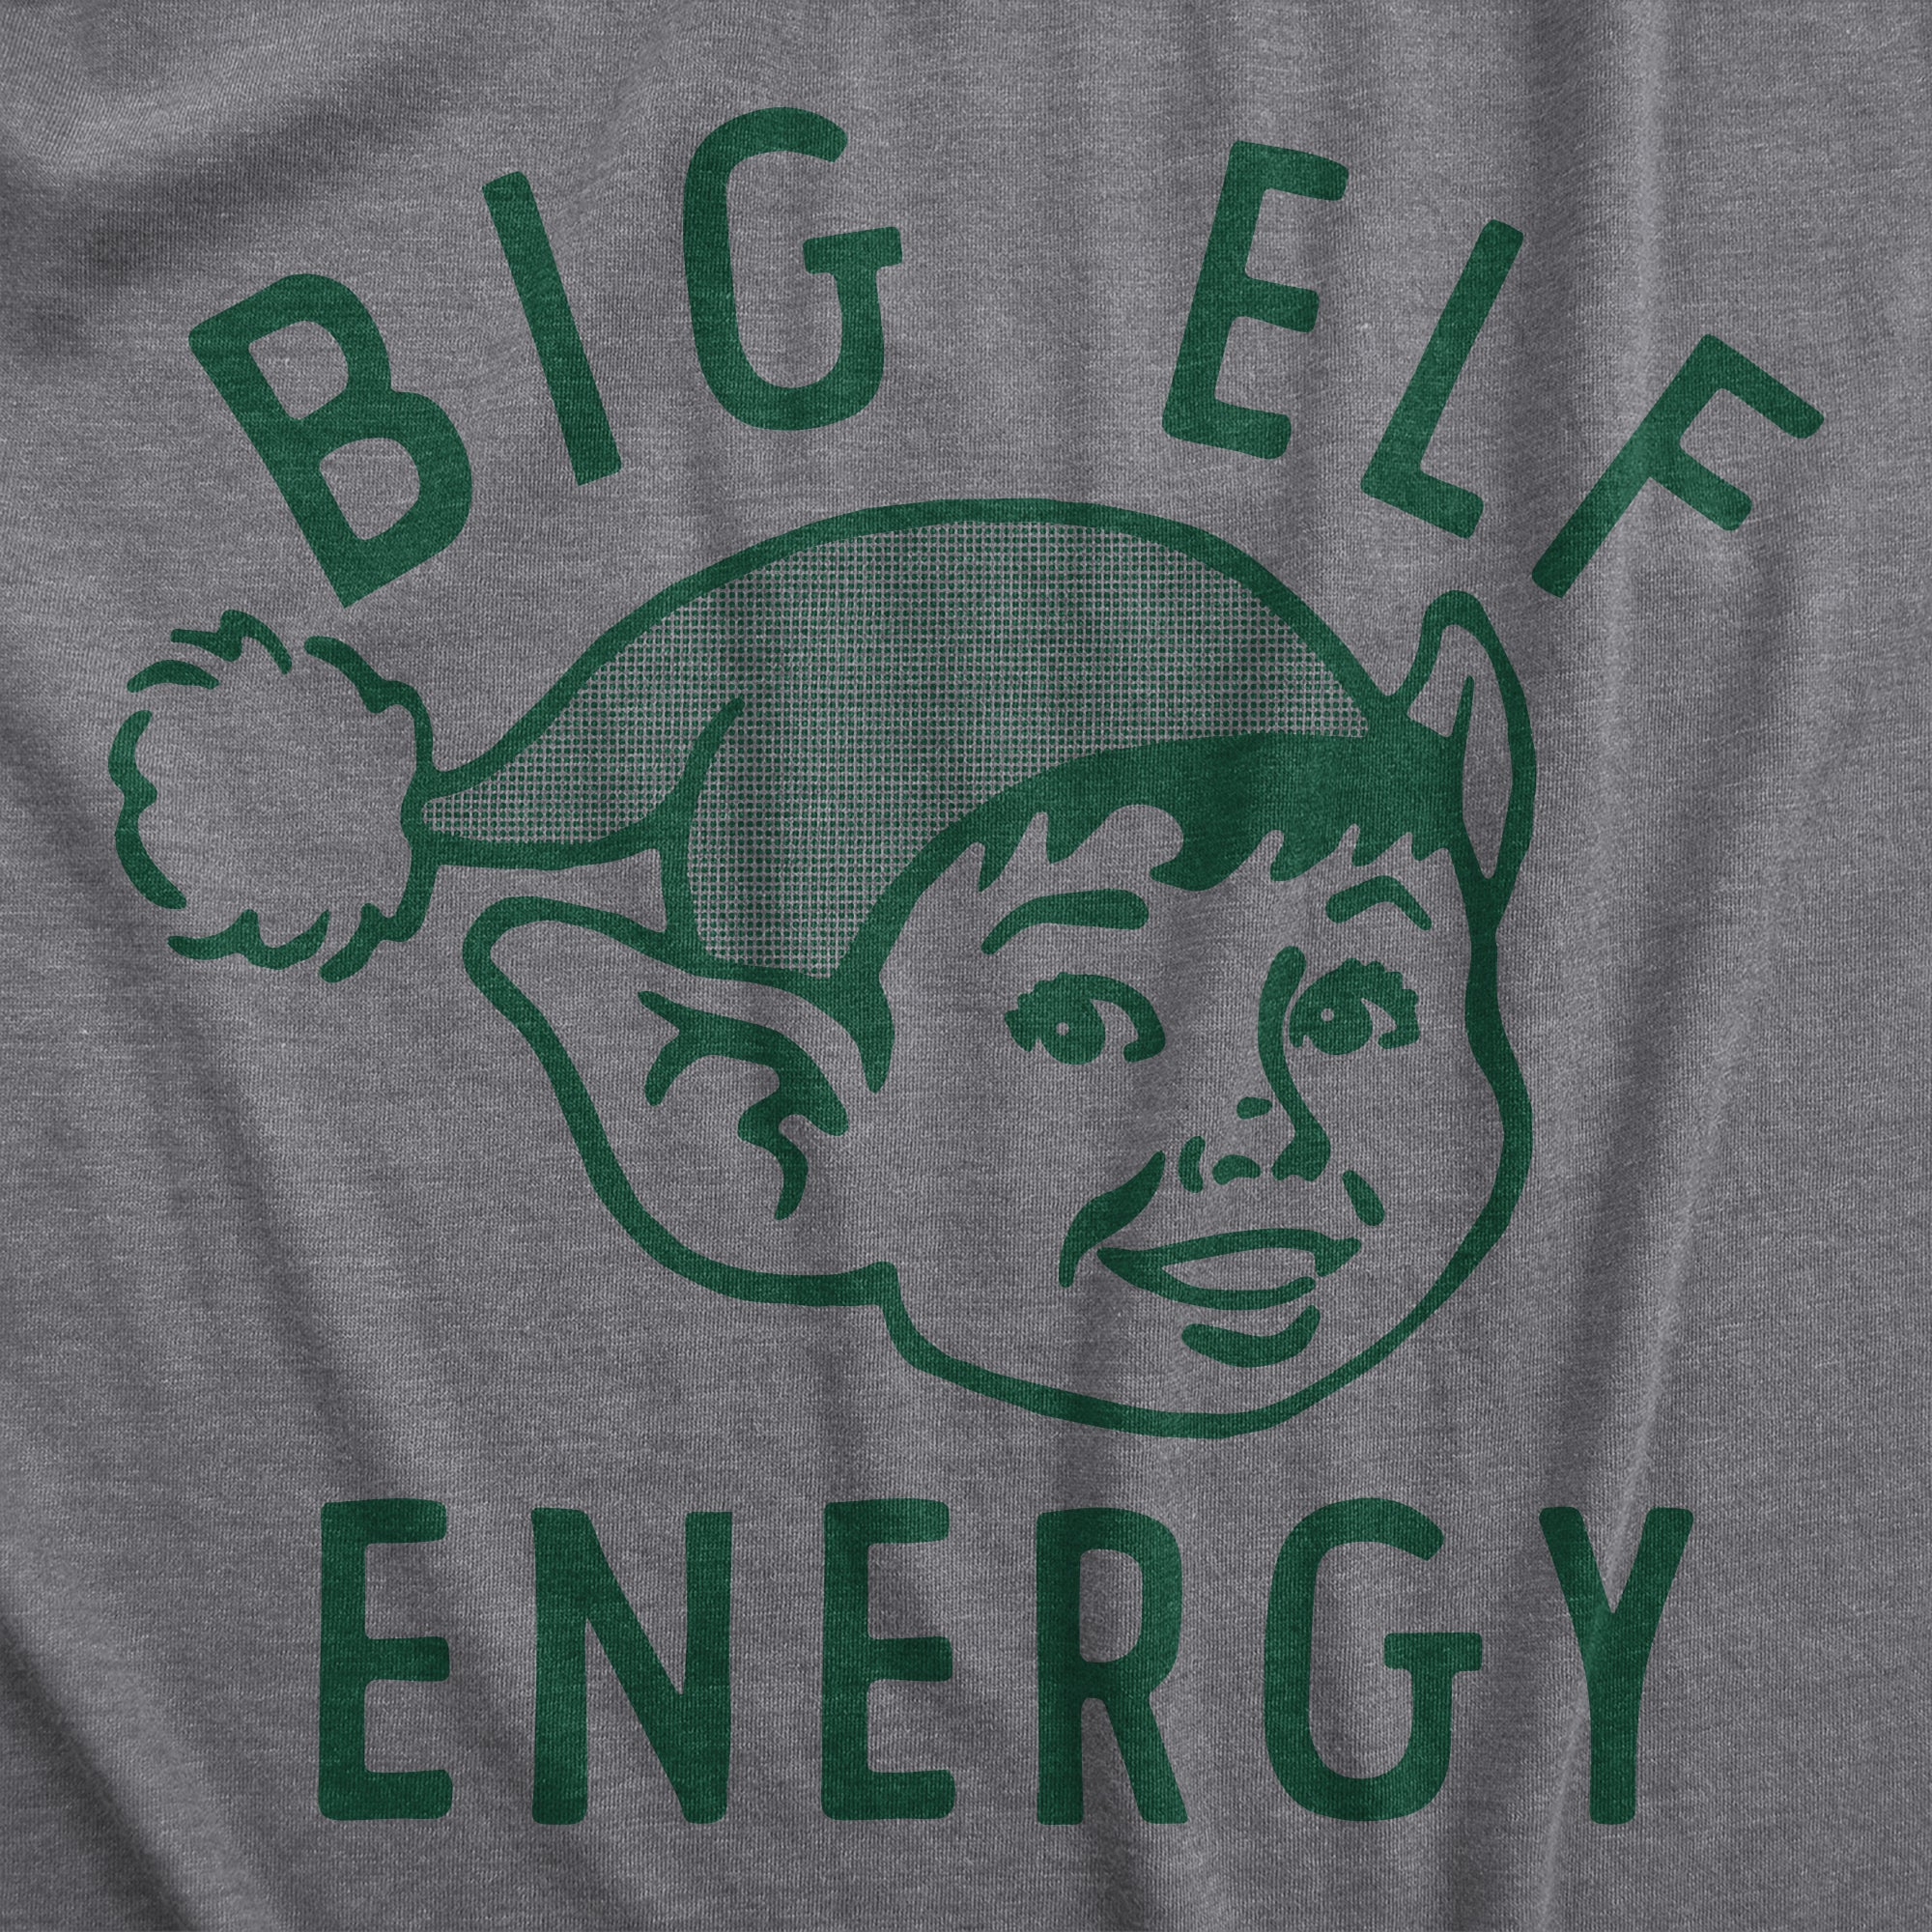 Funny Dark Heather Grey - ELF Big Elf Energy Womens T Shirt Nerdy Christmas Sarcastic Tee